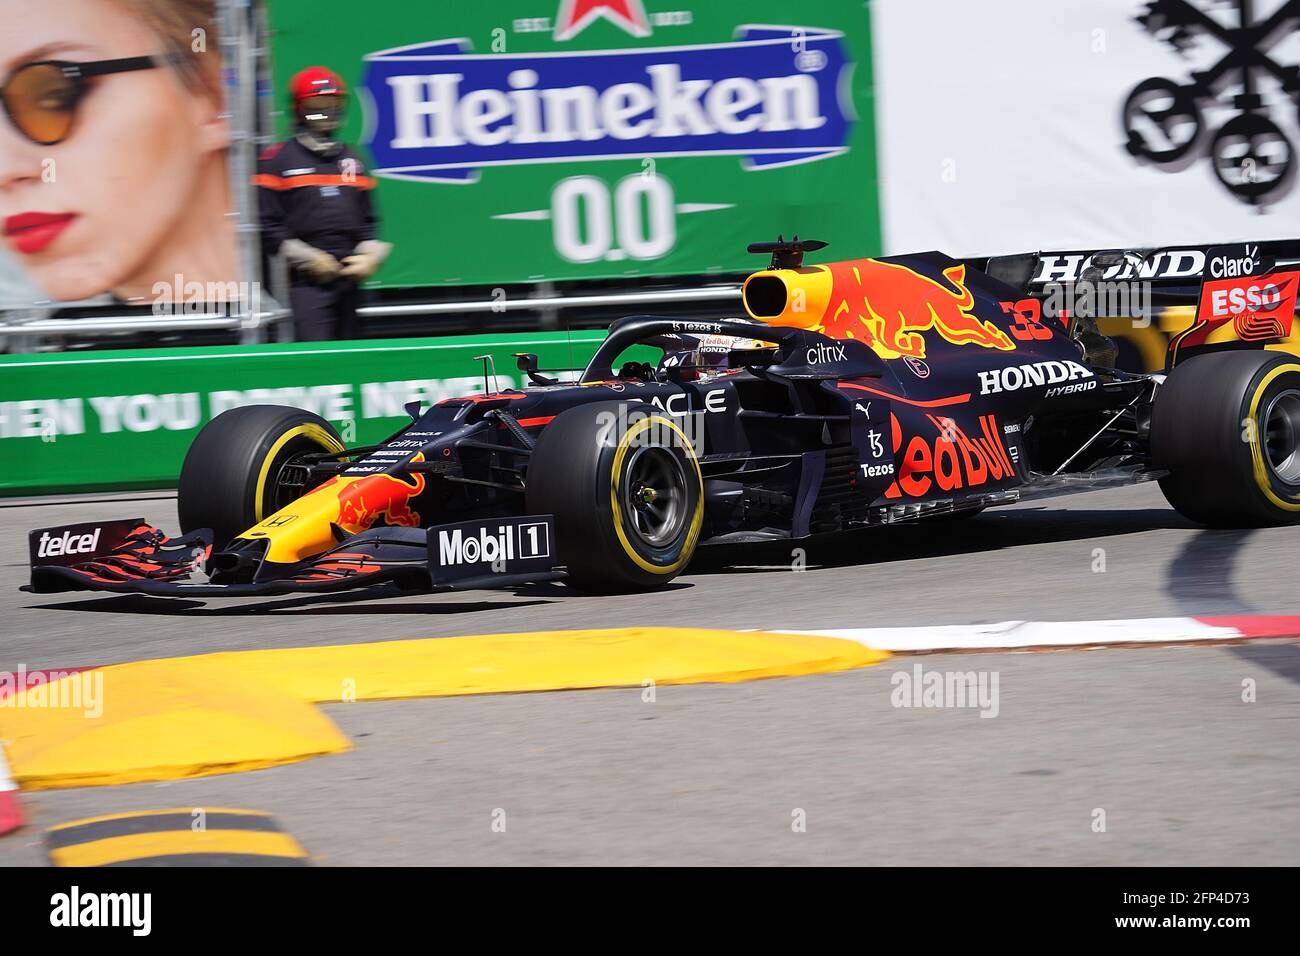 20 May 2021, Monaco: Motorsport: Formula 1 World Championship, Monaco Grand Prix, Free Practice 1. Max Verstappen is on track in the Red Bull. Photo: Hasan Bratic/dpa Stock Photo